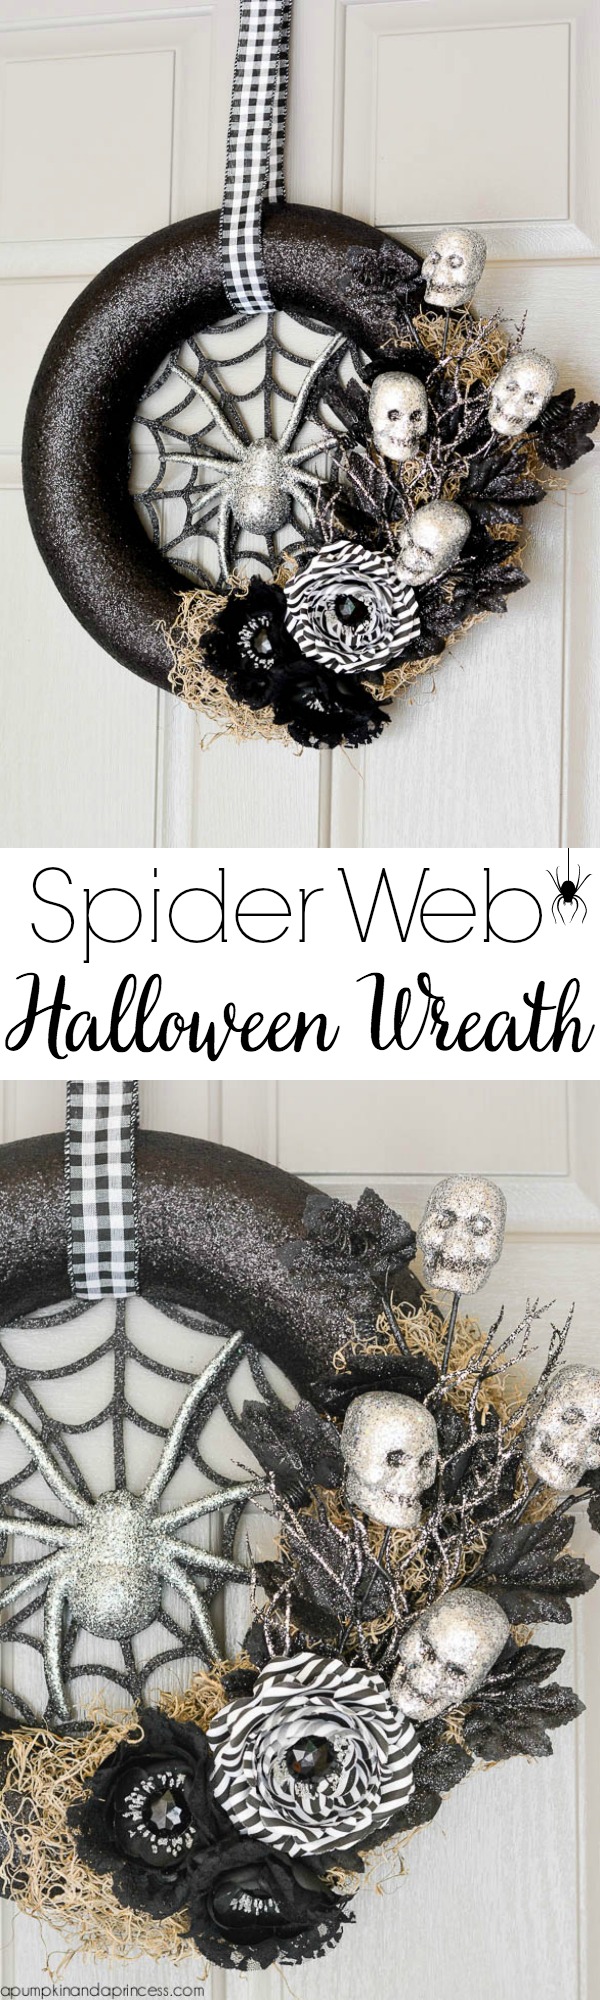 DIY-Spider-Web-Halloween-Wreath